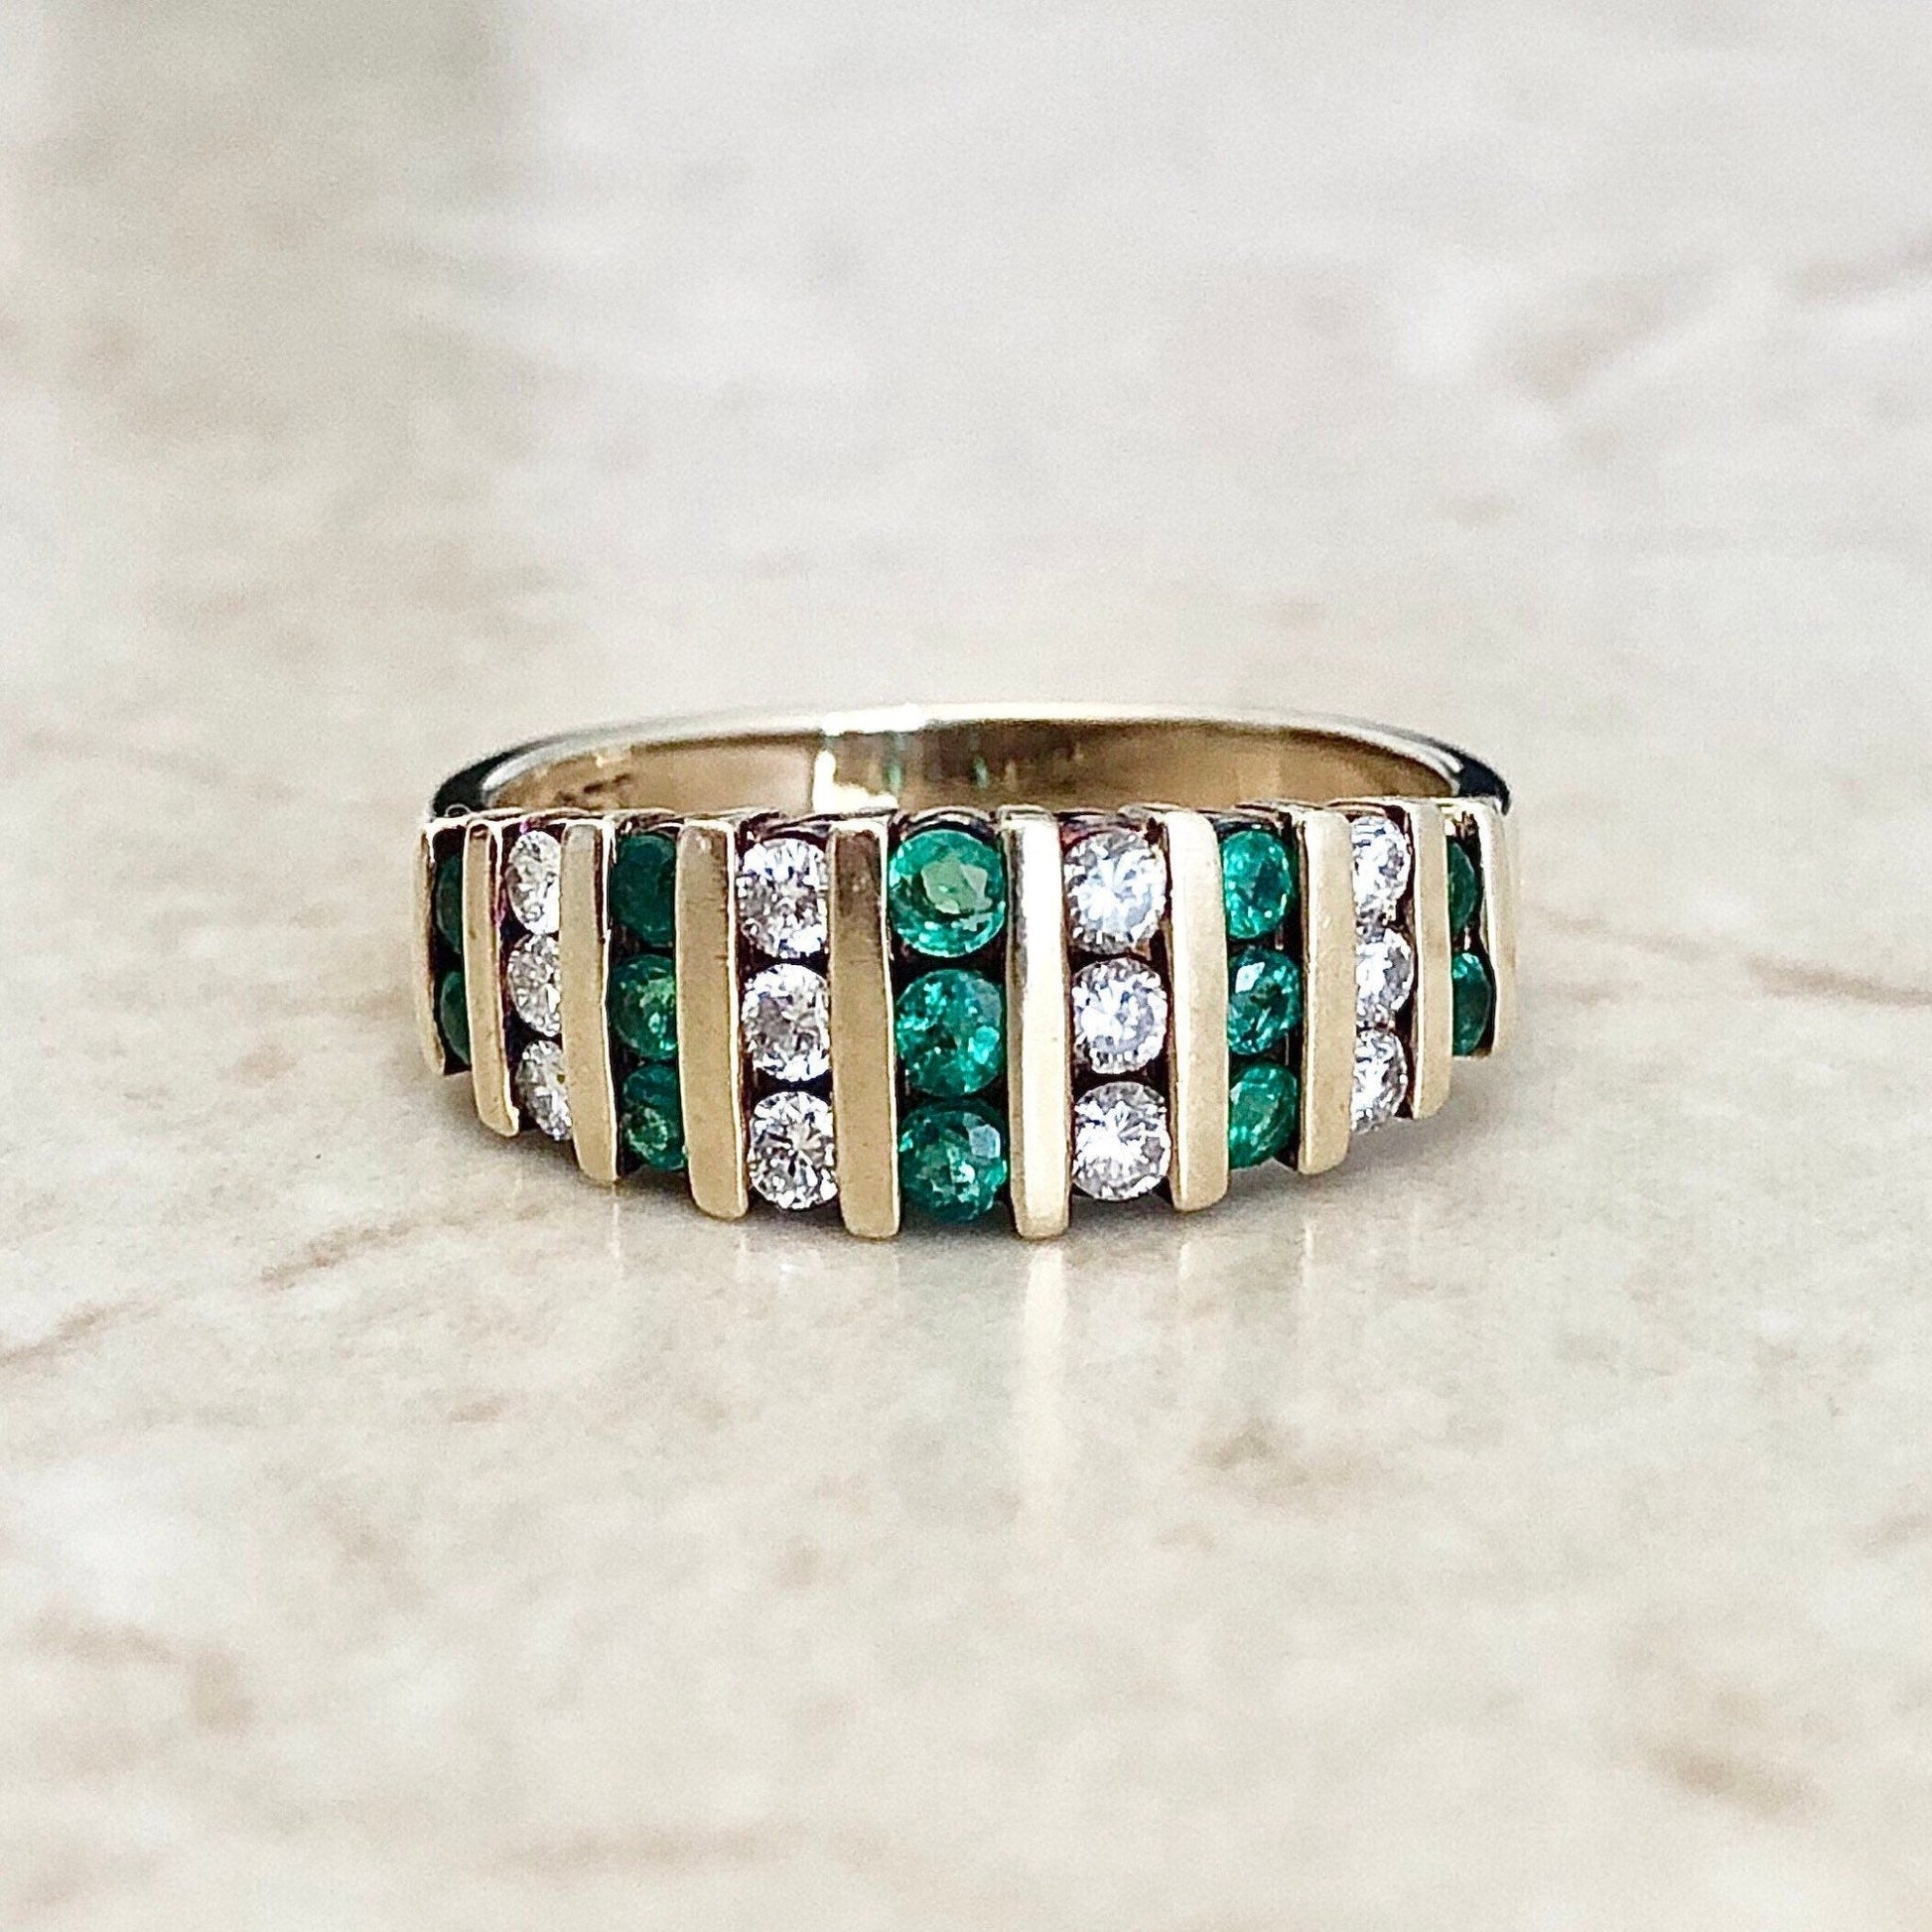 Vintage Natural Emerald & Diamond Cocktail Ring - 14K Yellow Gold - Genuine Gemstone - Size 6.75 - Avril May Birthstone - Birthday Gift